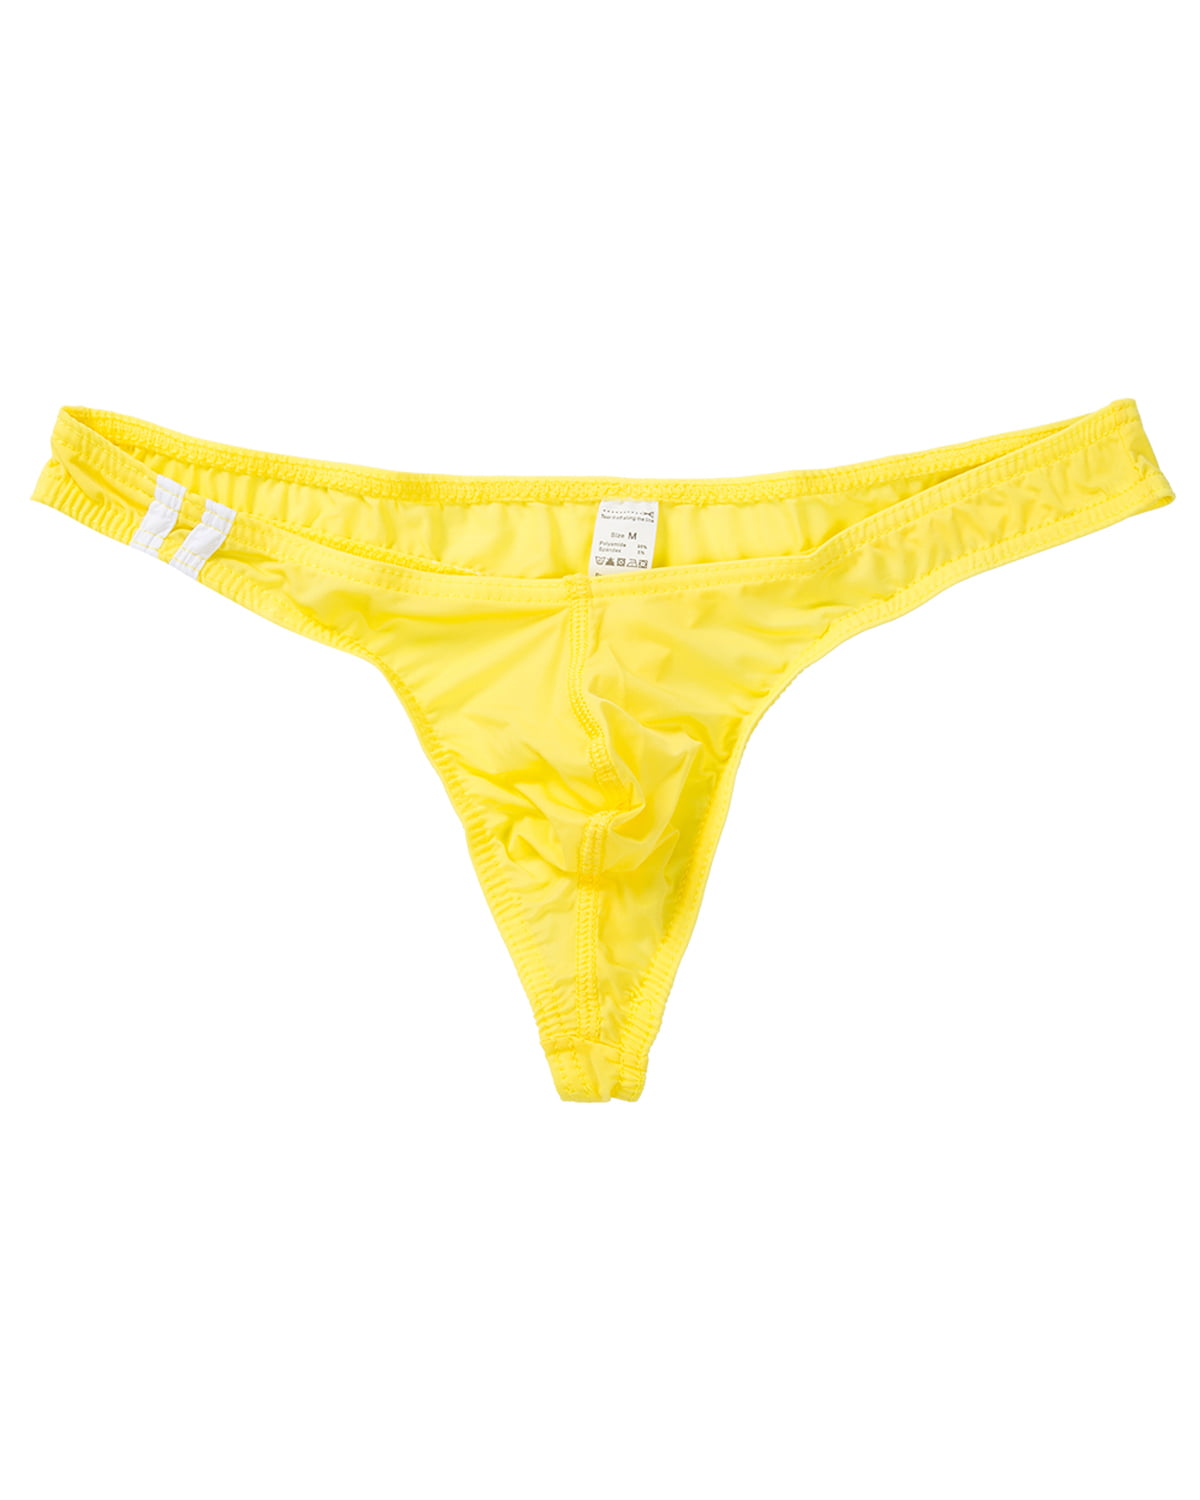 Musuos - Musuos Mens Sports Briefs Backless Cotton Thong Underwear Up ...